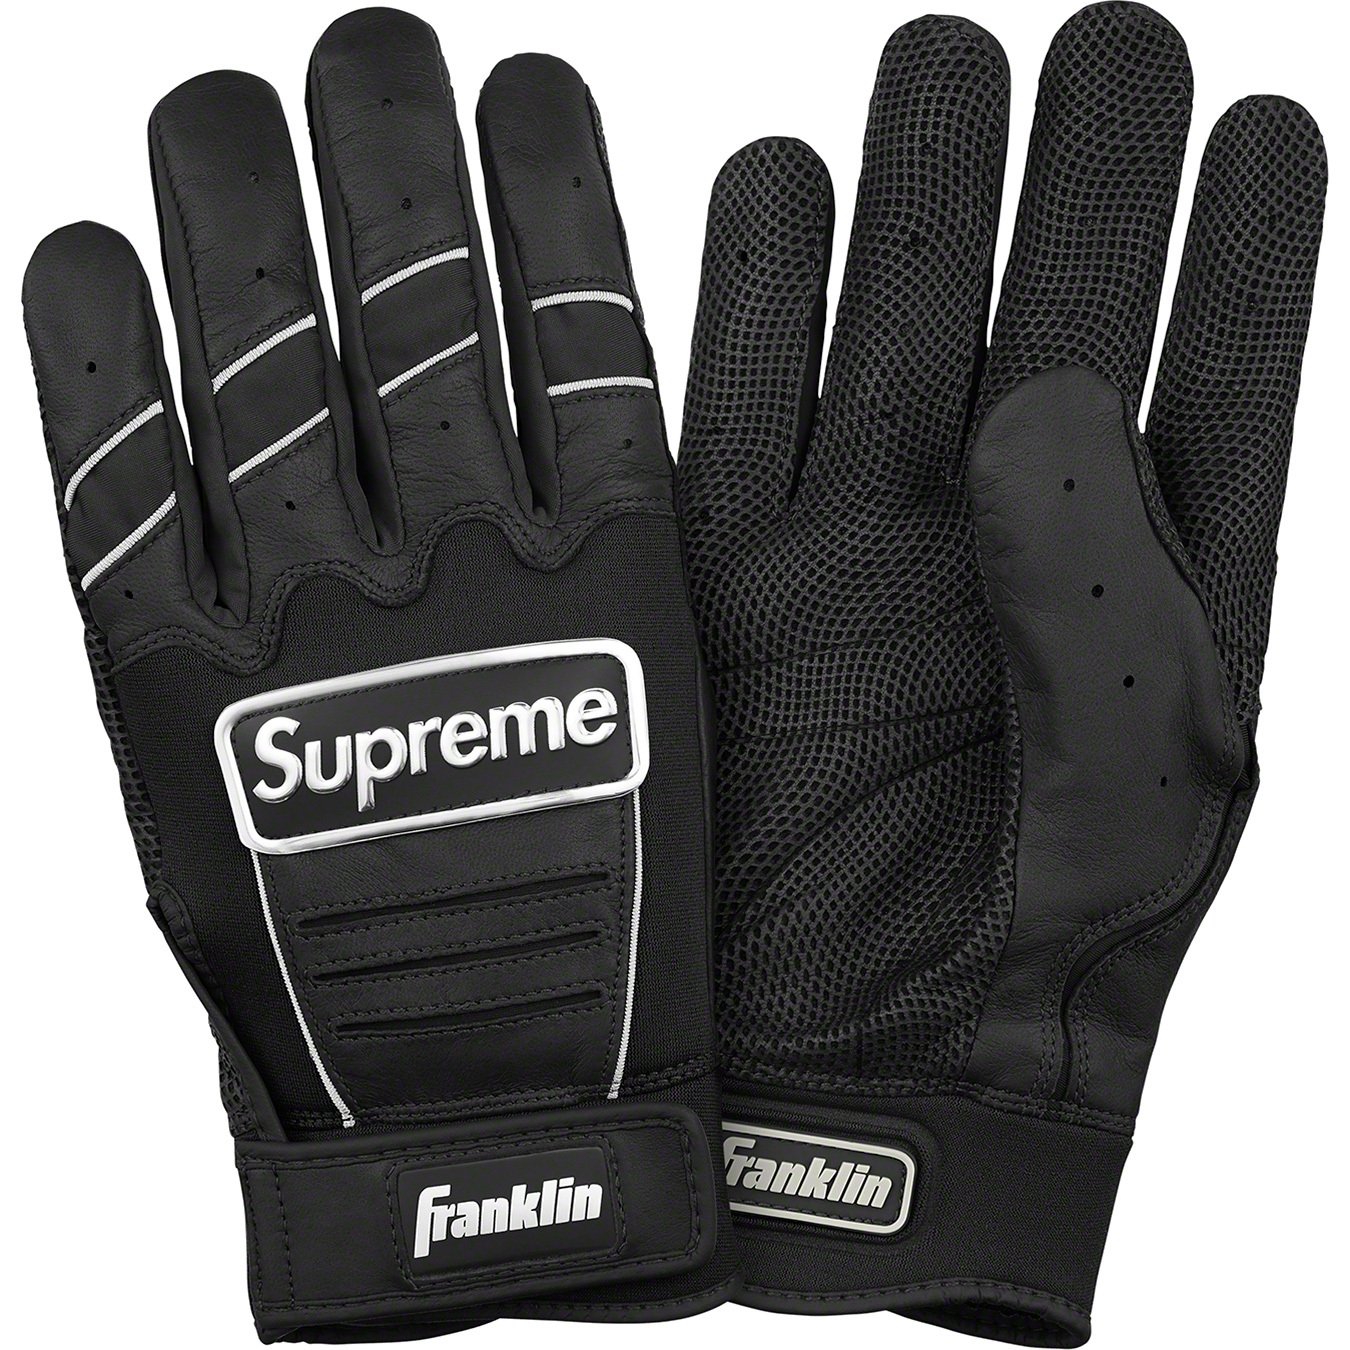 Supreme®/Franklin® CFX Pro Batting Glove - Supreme Community